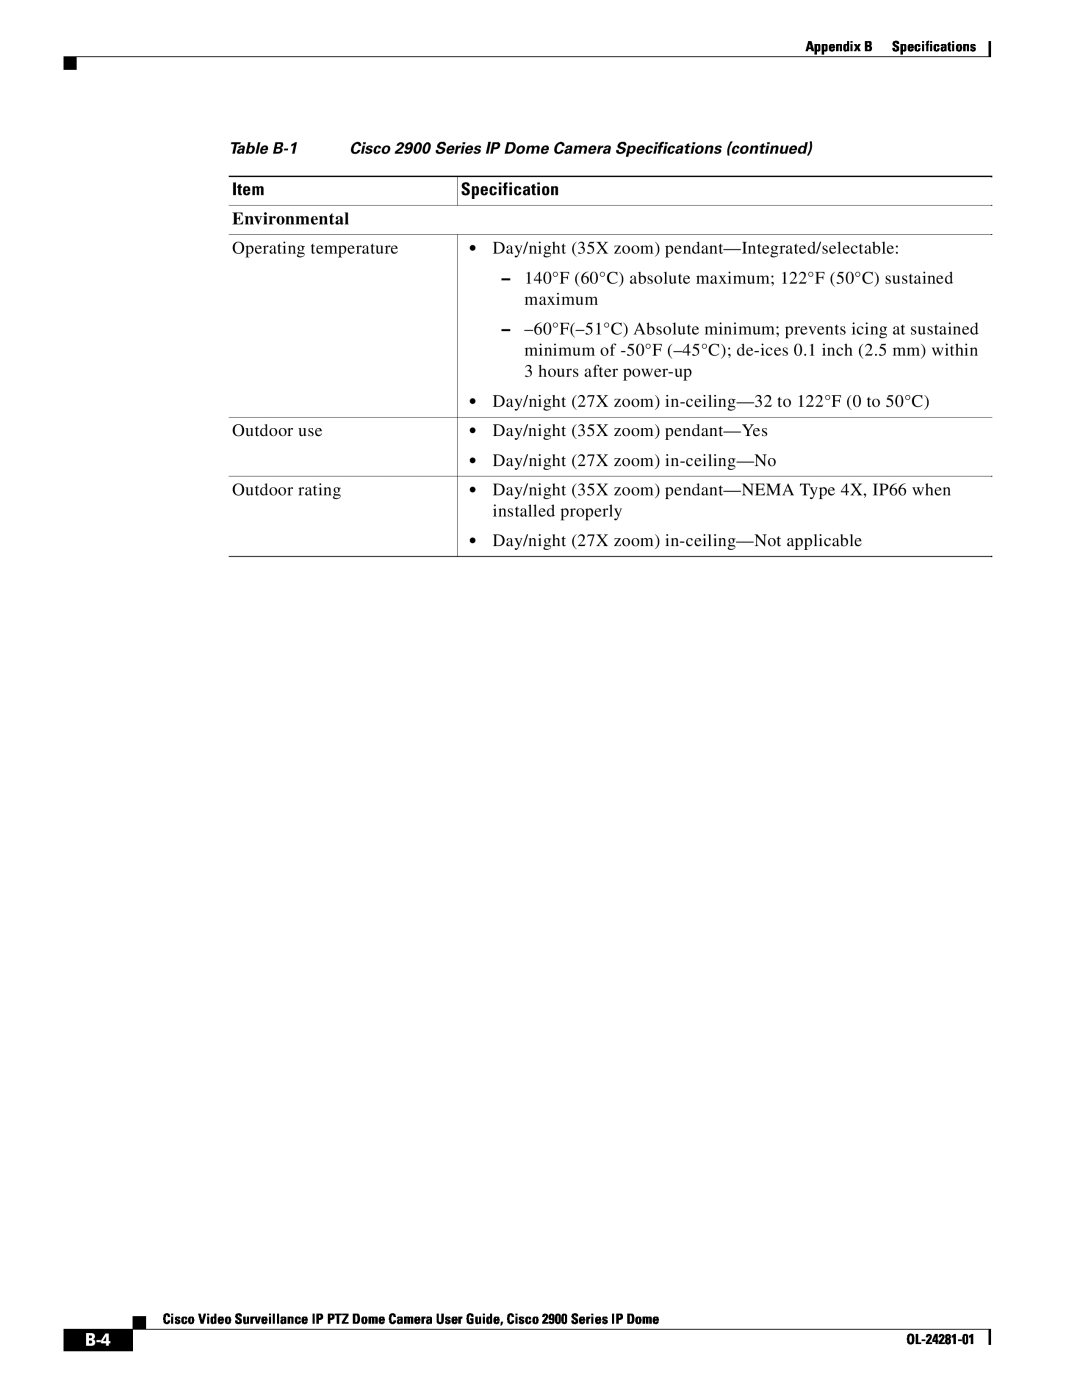 Cisco Systems OL-24281-01, 2900 manual Environmental 